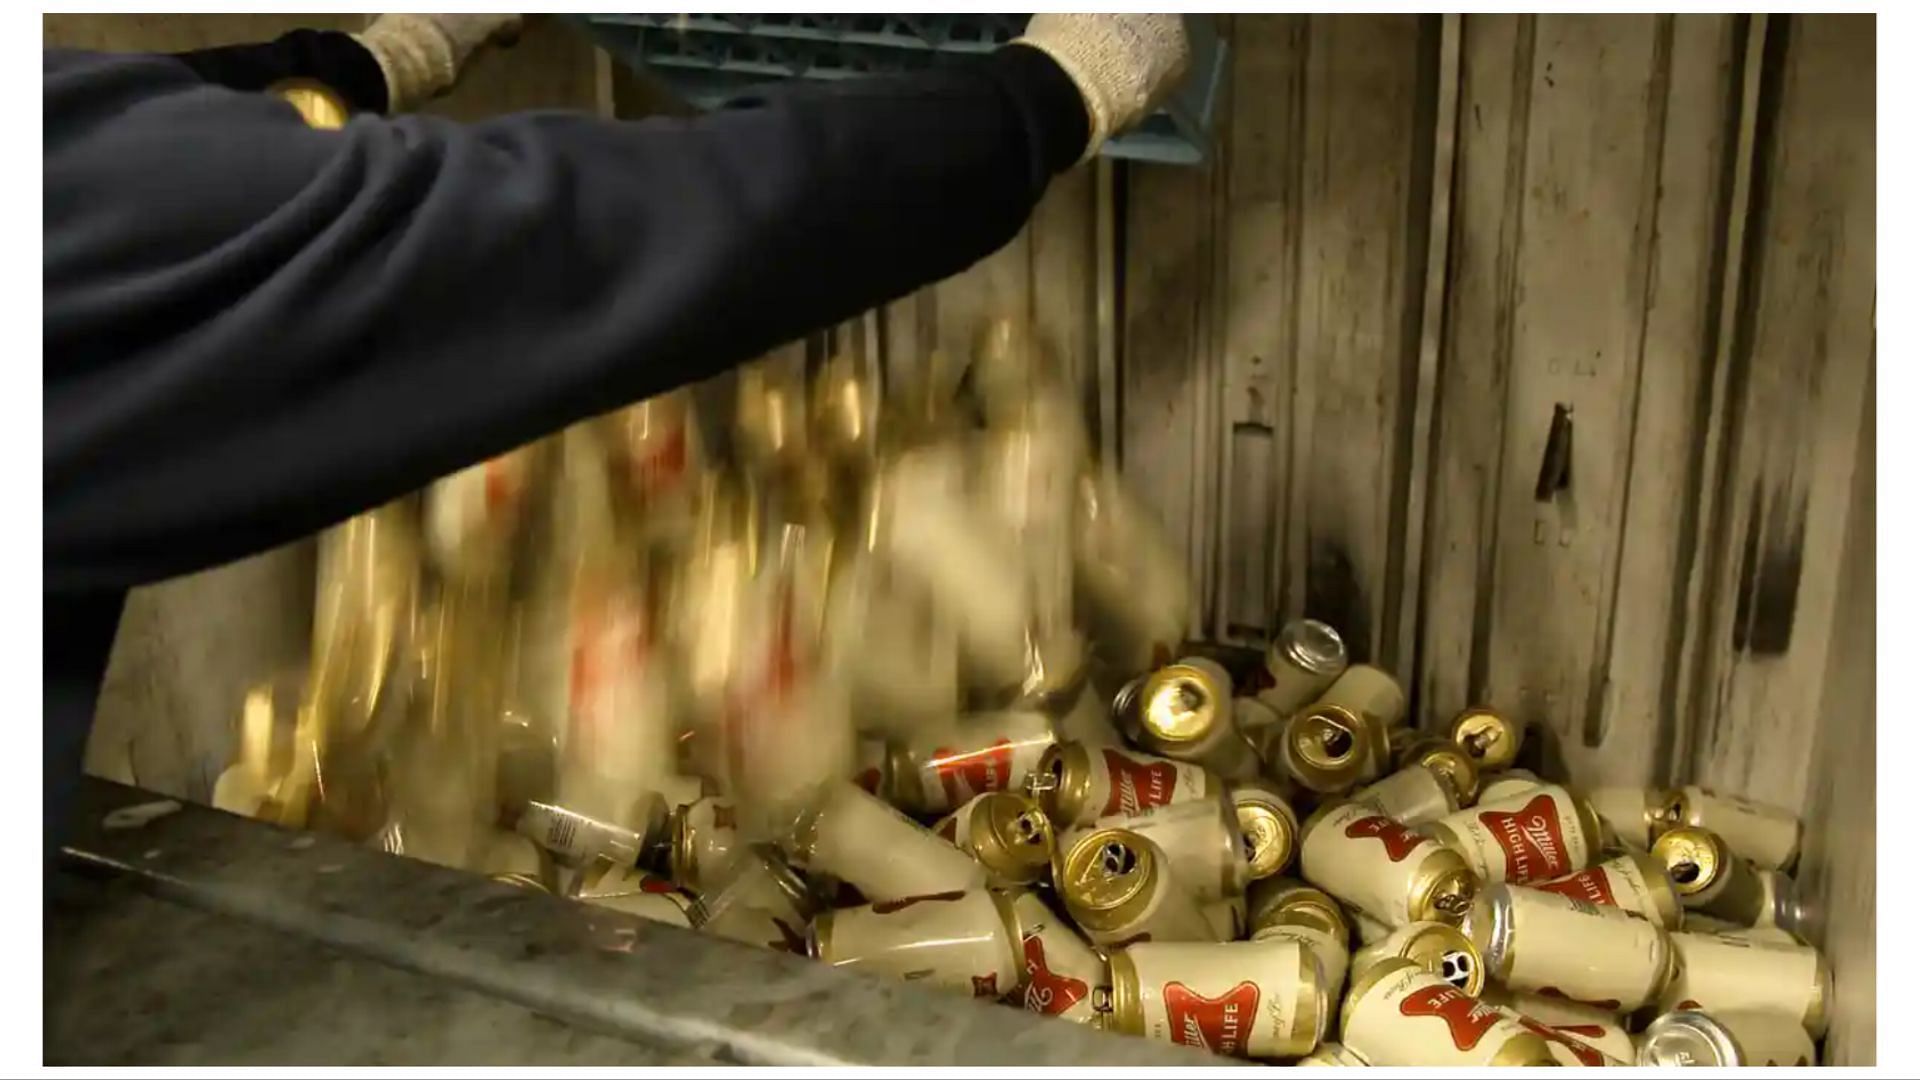 Belgium dumps more than 2,000 cans of Miller High Lite based on slogan (Image via Twitter/MorningBrew)